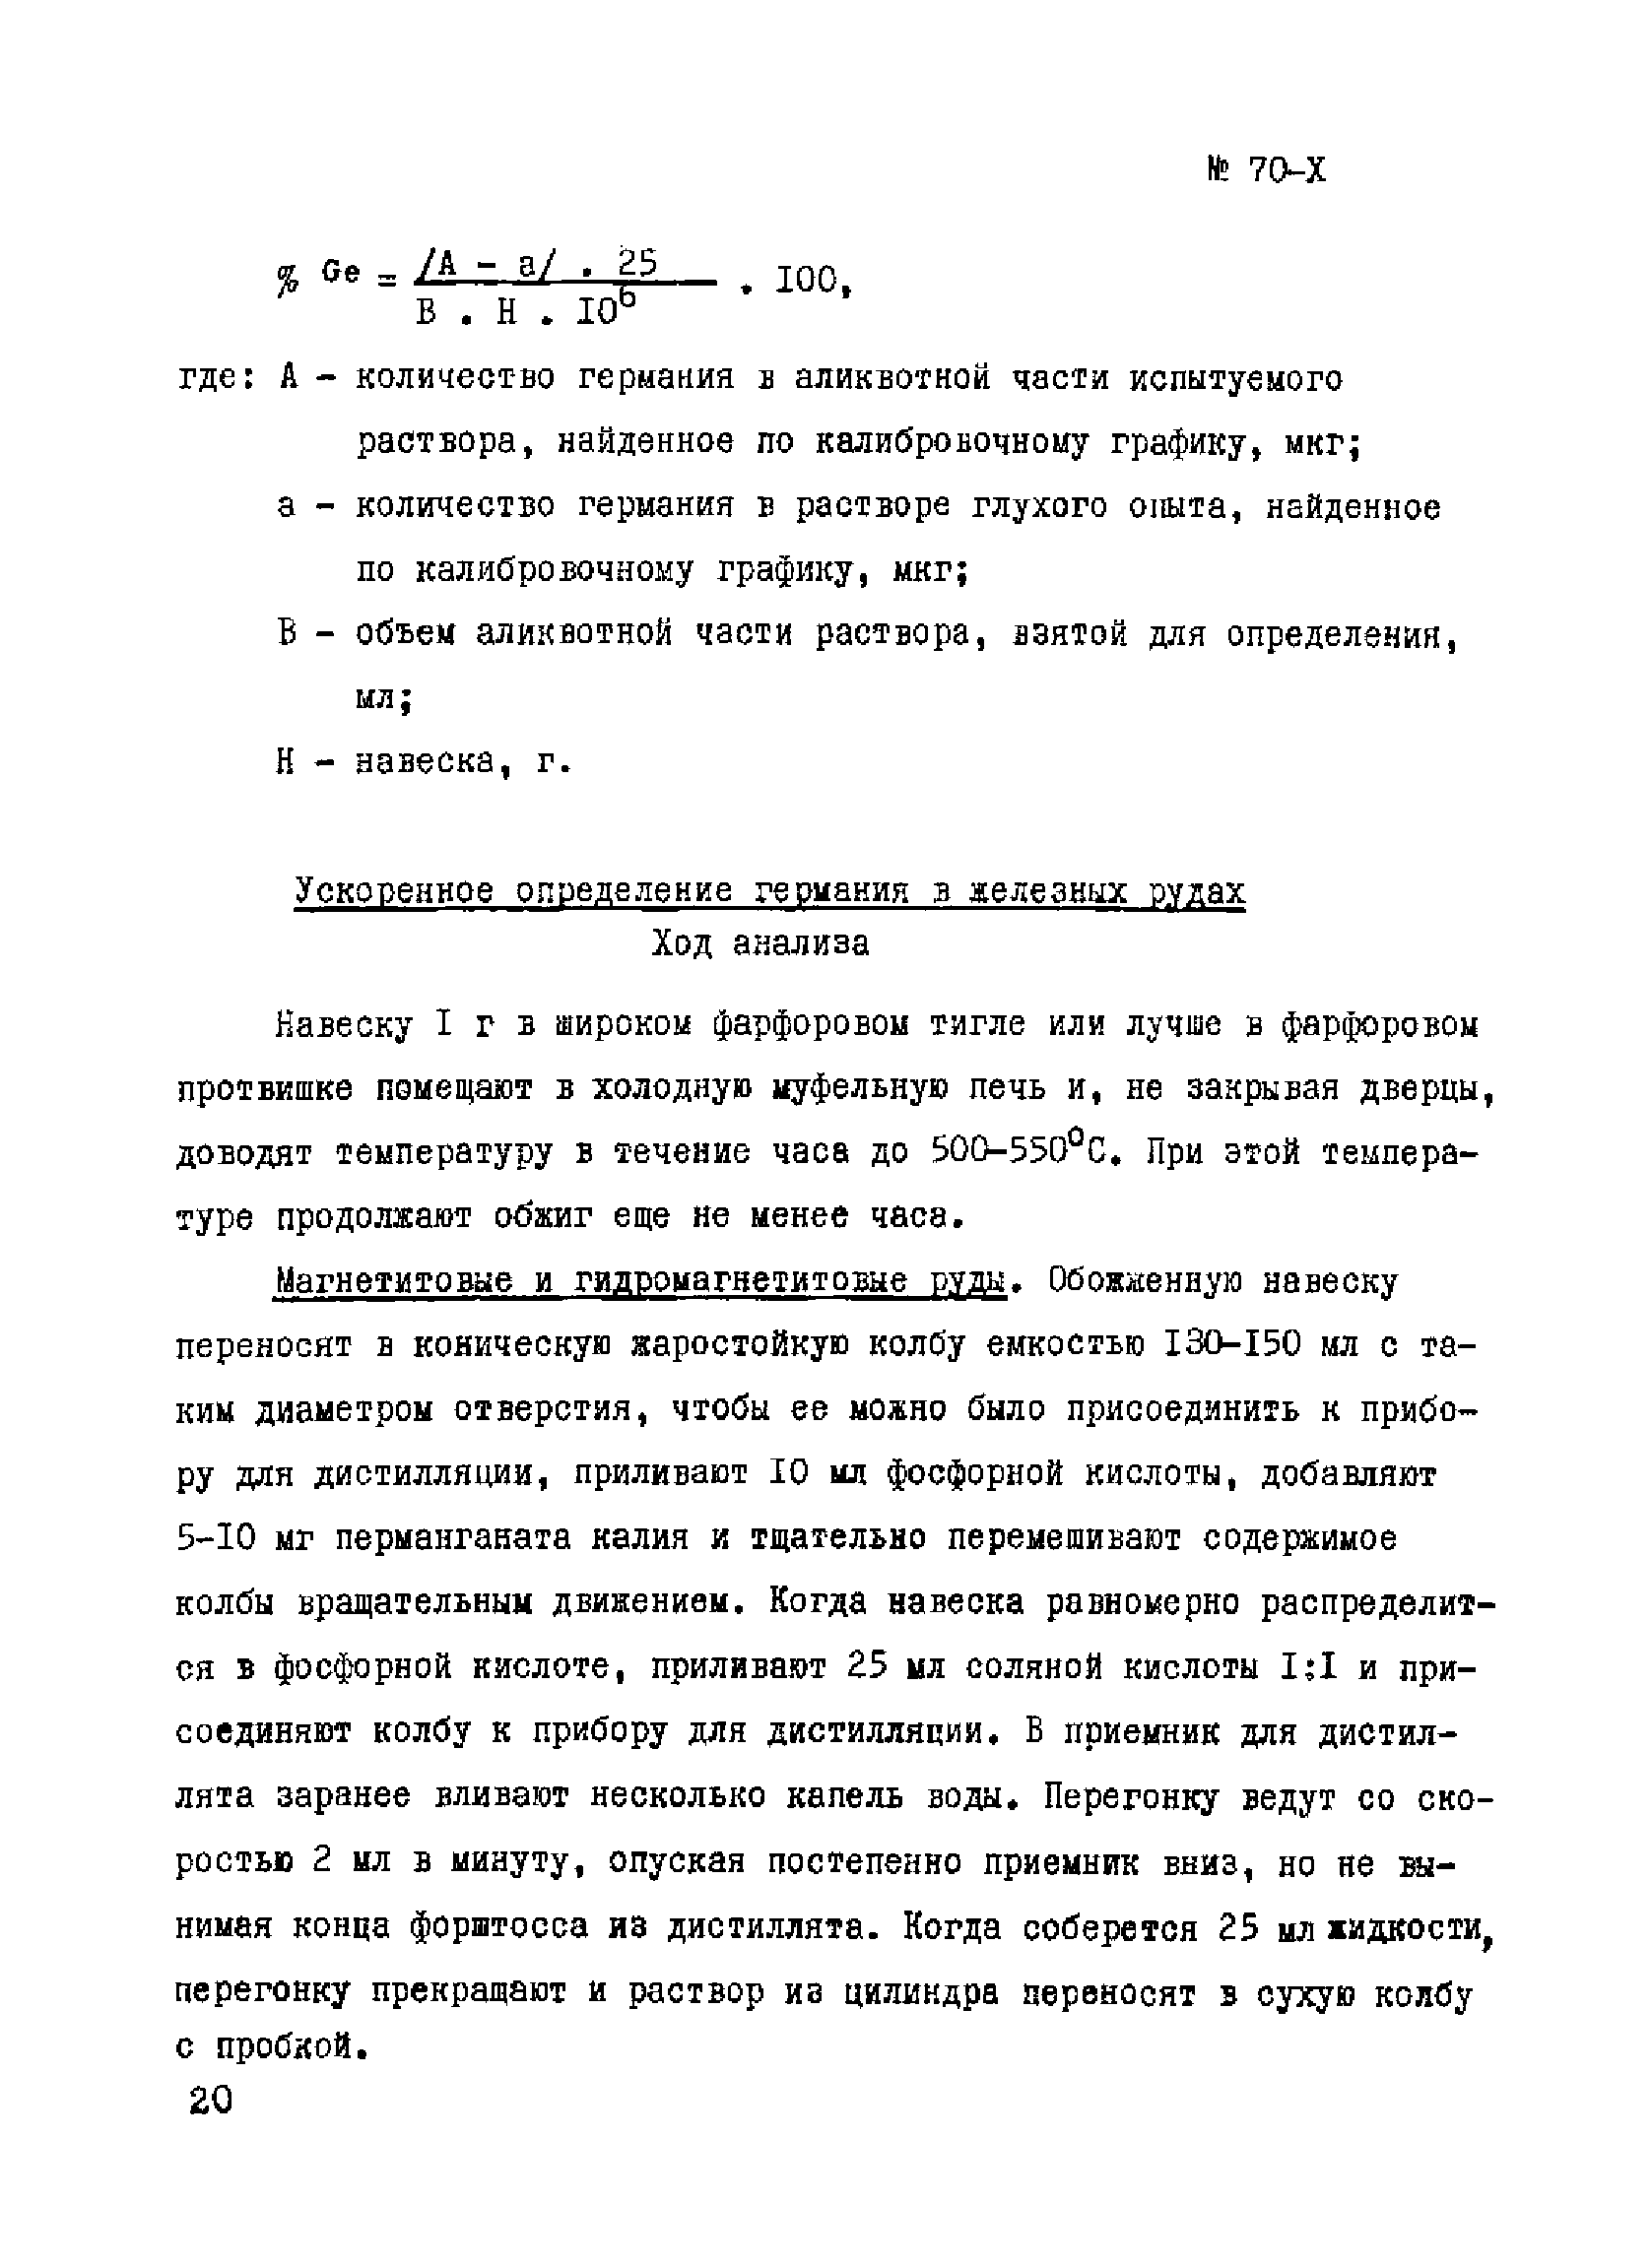 Инструкция НСАМ 70-Х